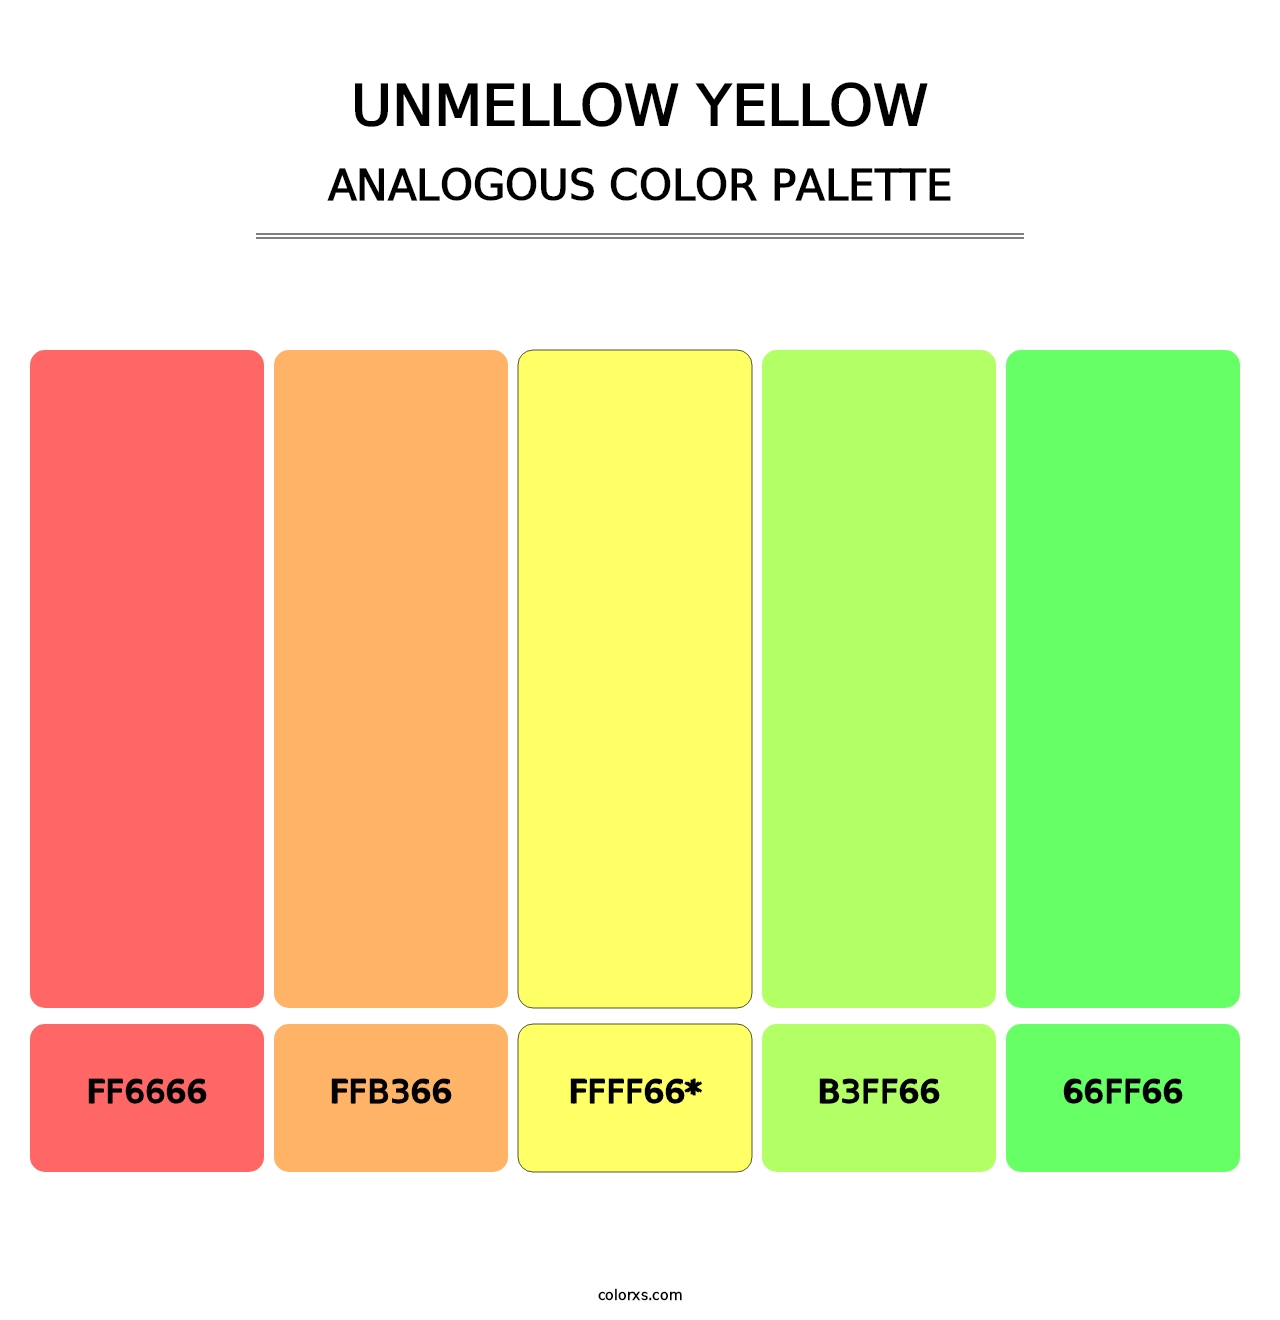 Unmellow Yellow - Analogous Color Palette